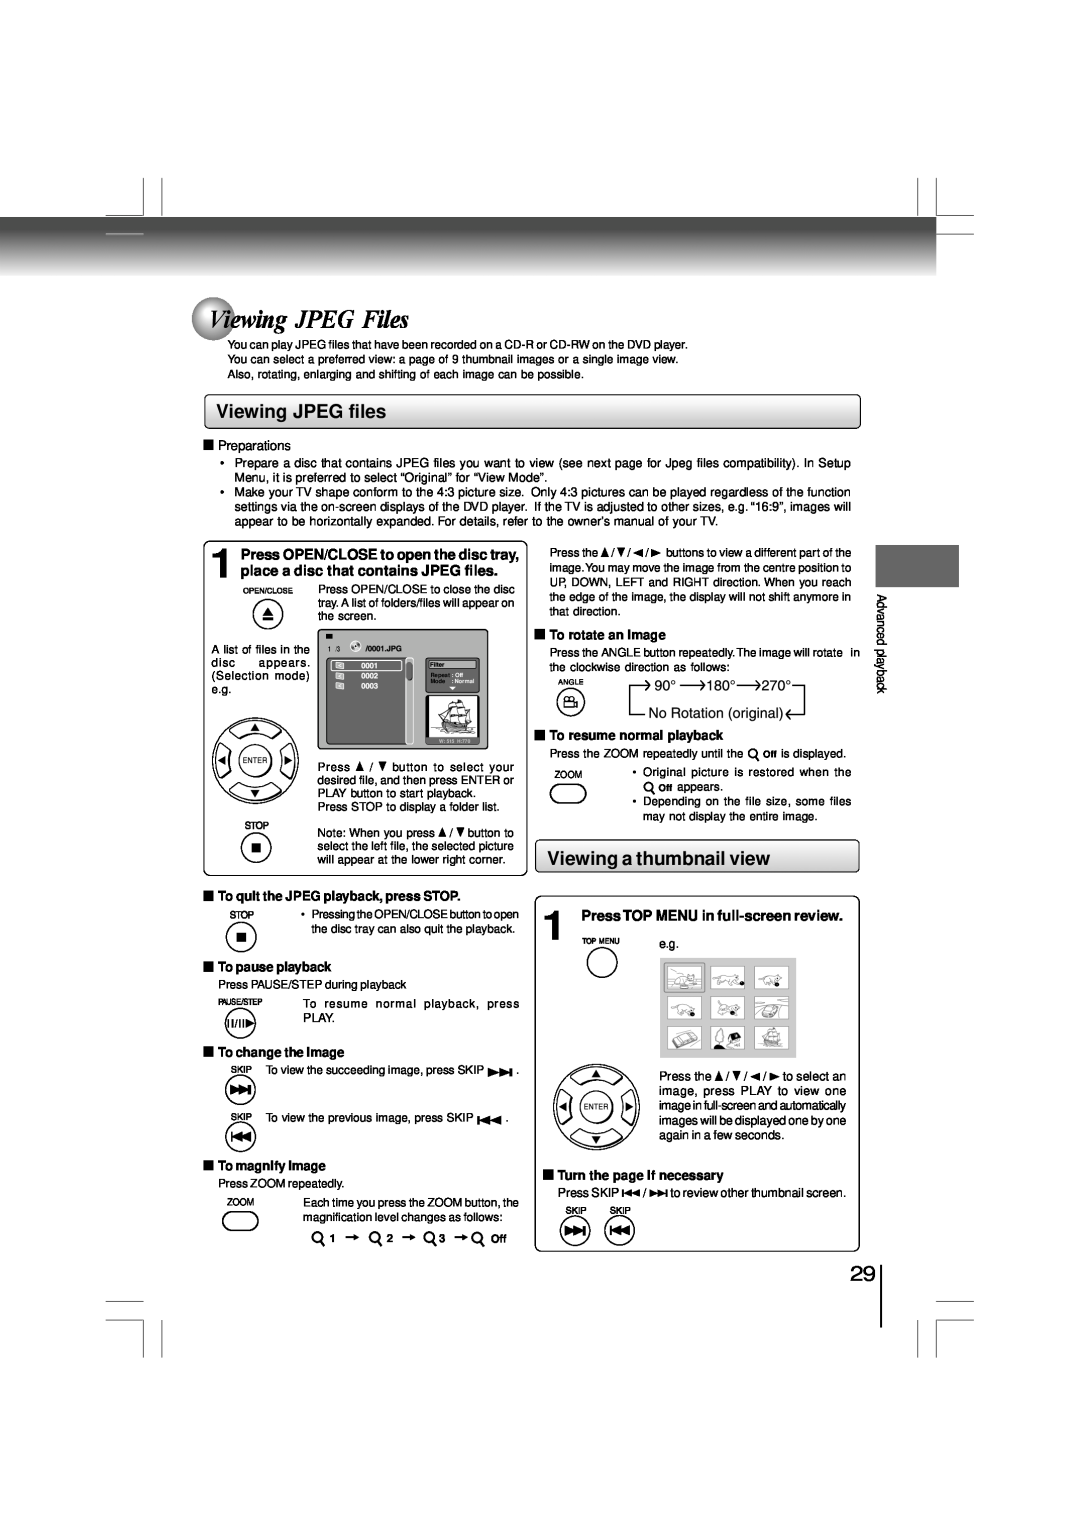 Toshiba SD-480EKE Viewing JPEG Files, Viewing JPEG files, Viewing a thumbnail view, To rotate an image, To pause playback 